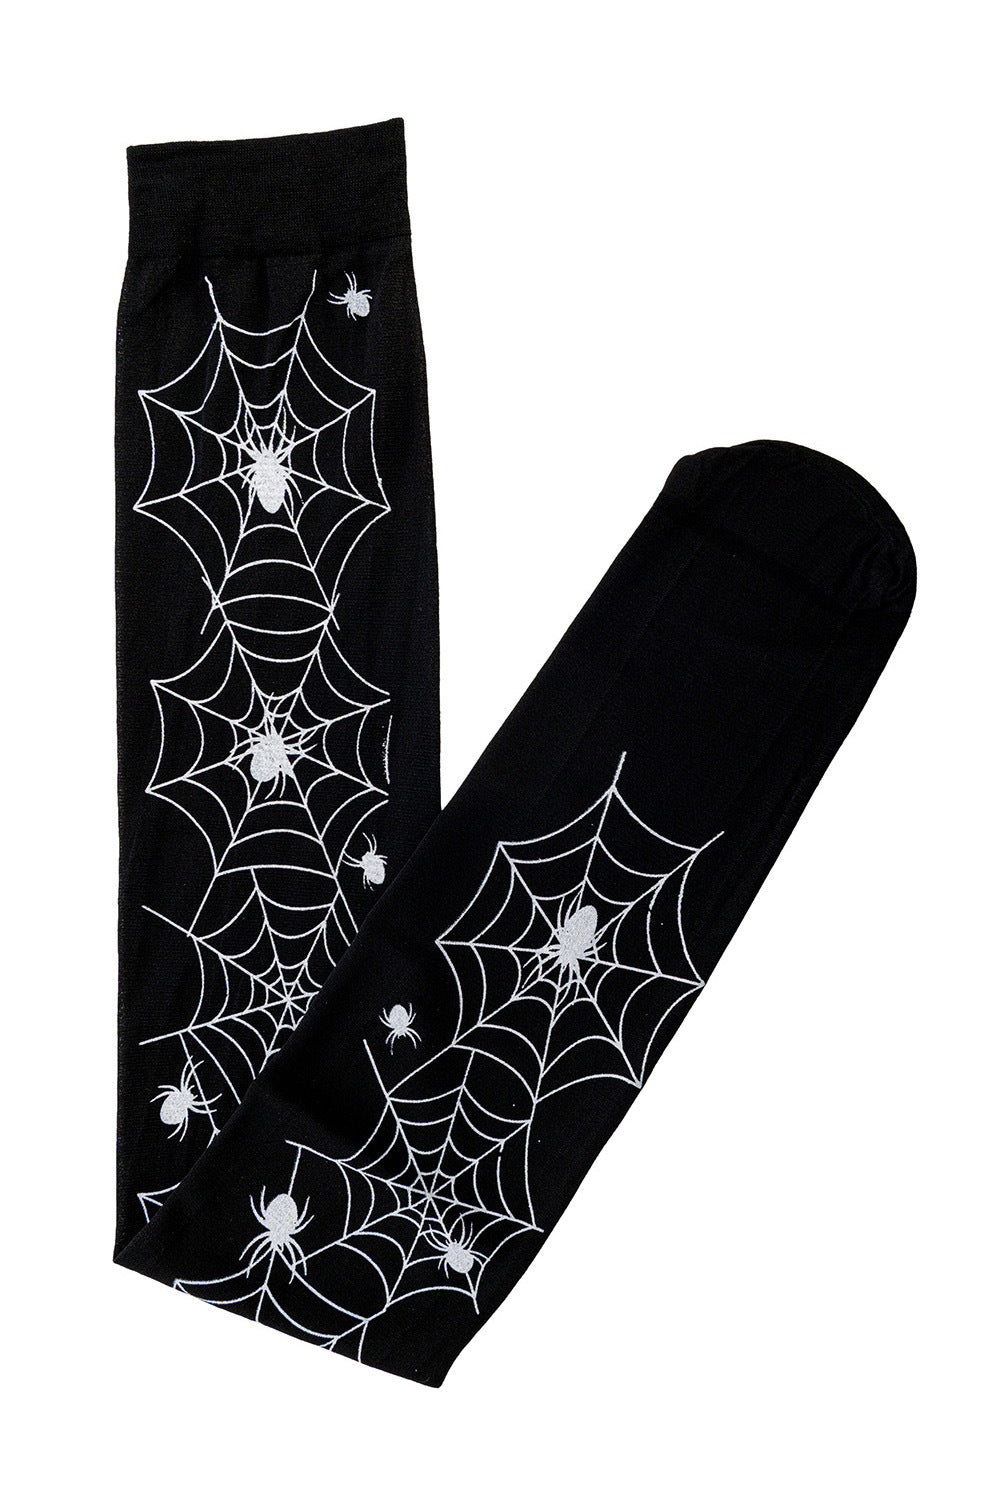 Banned Alternative Spider Web Over The Knee Socks